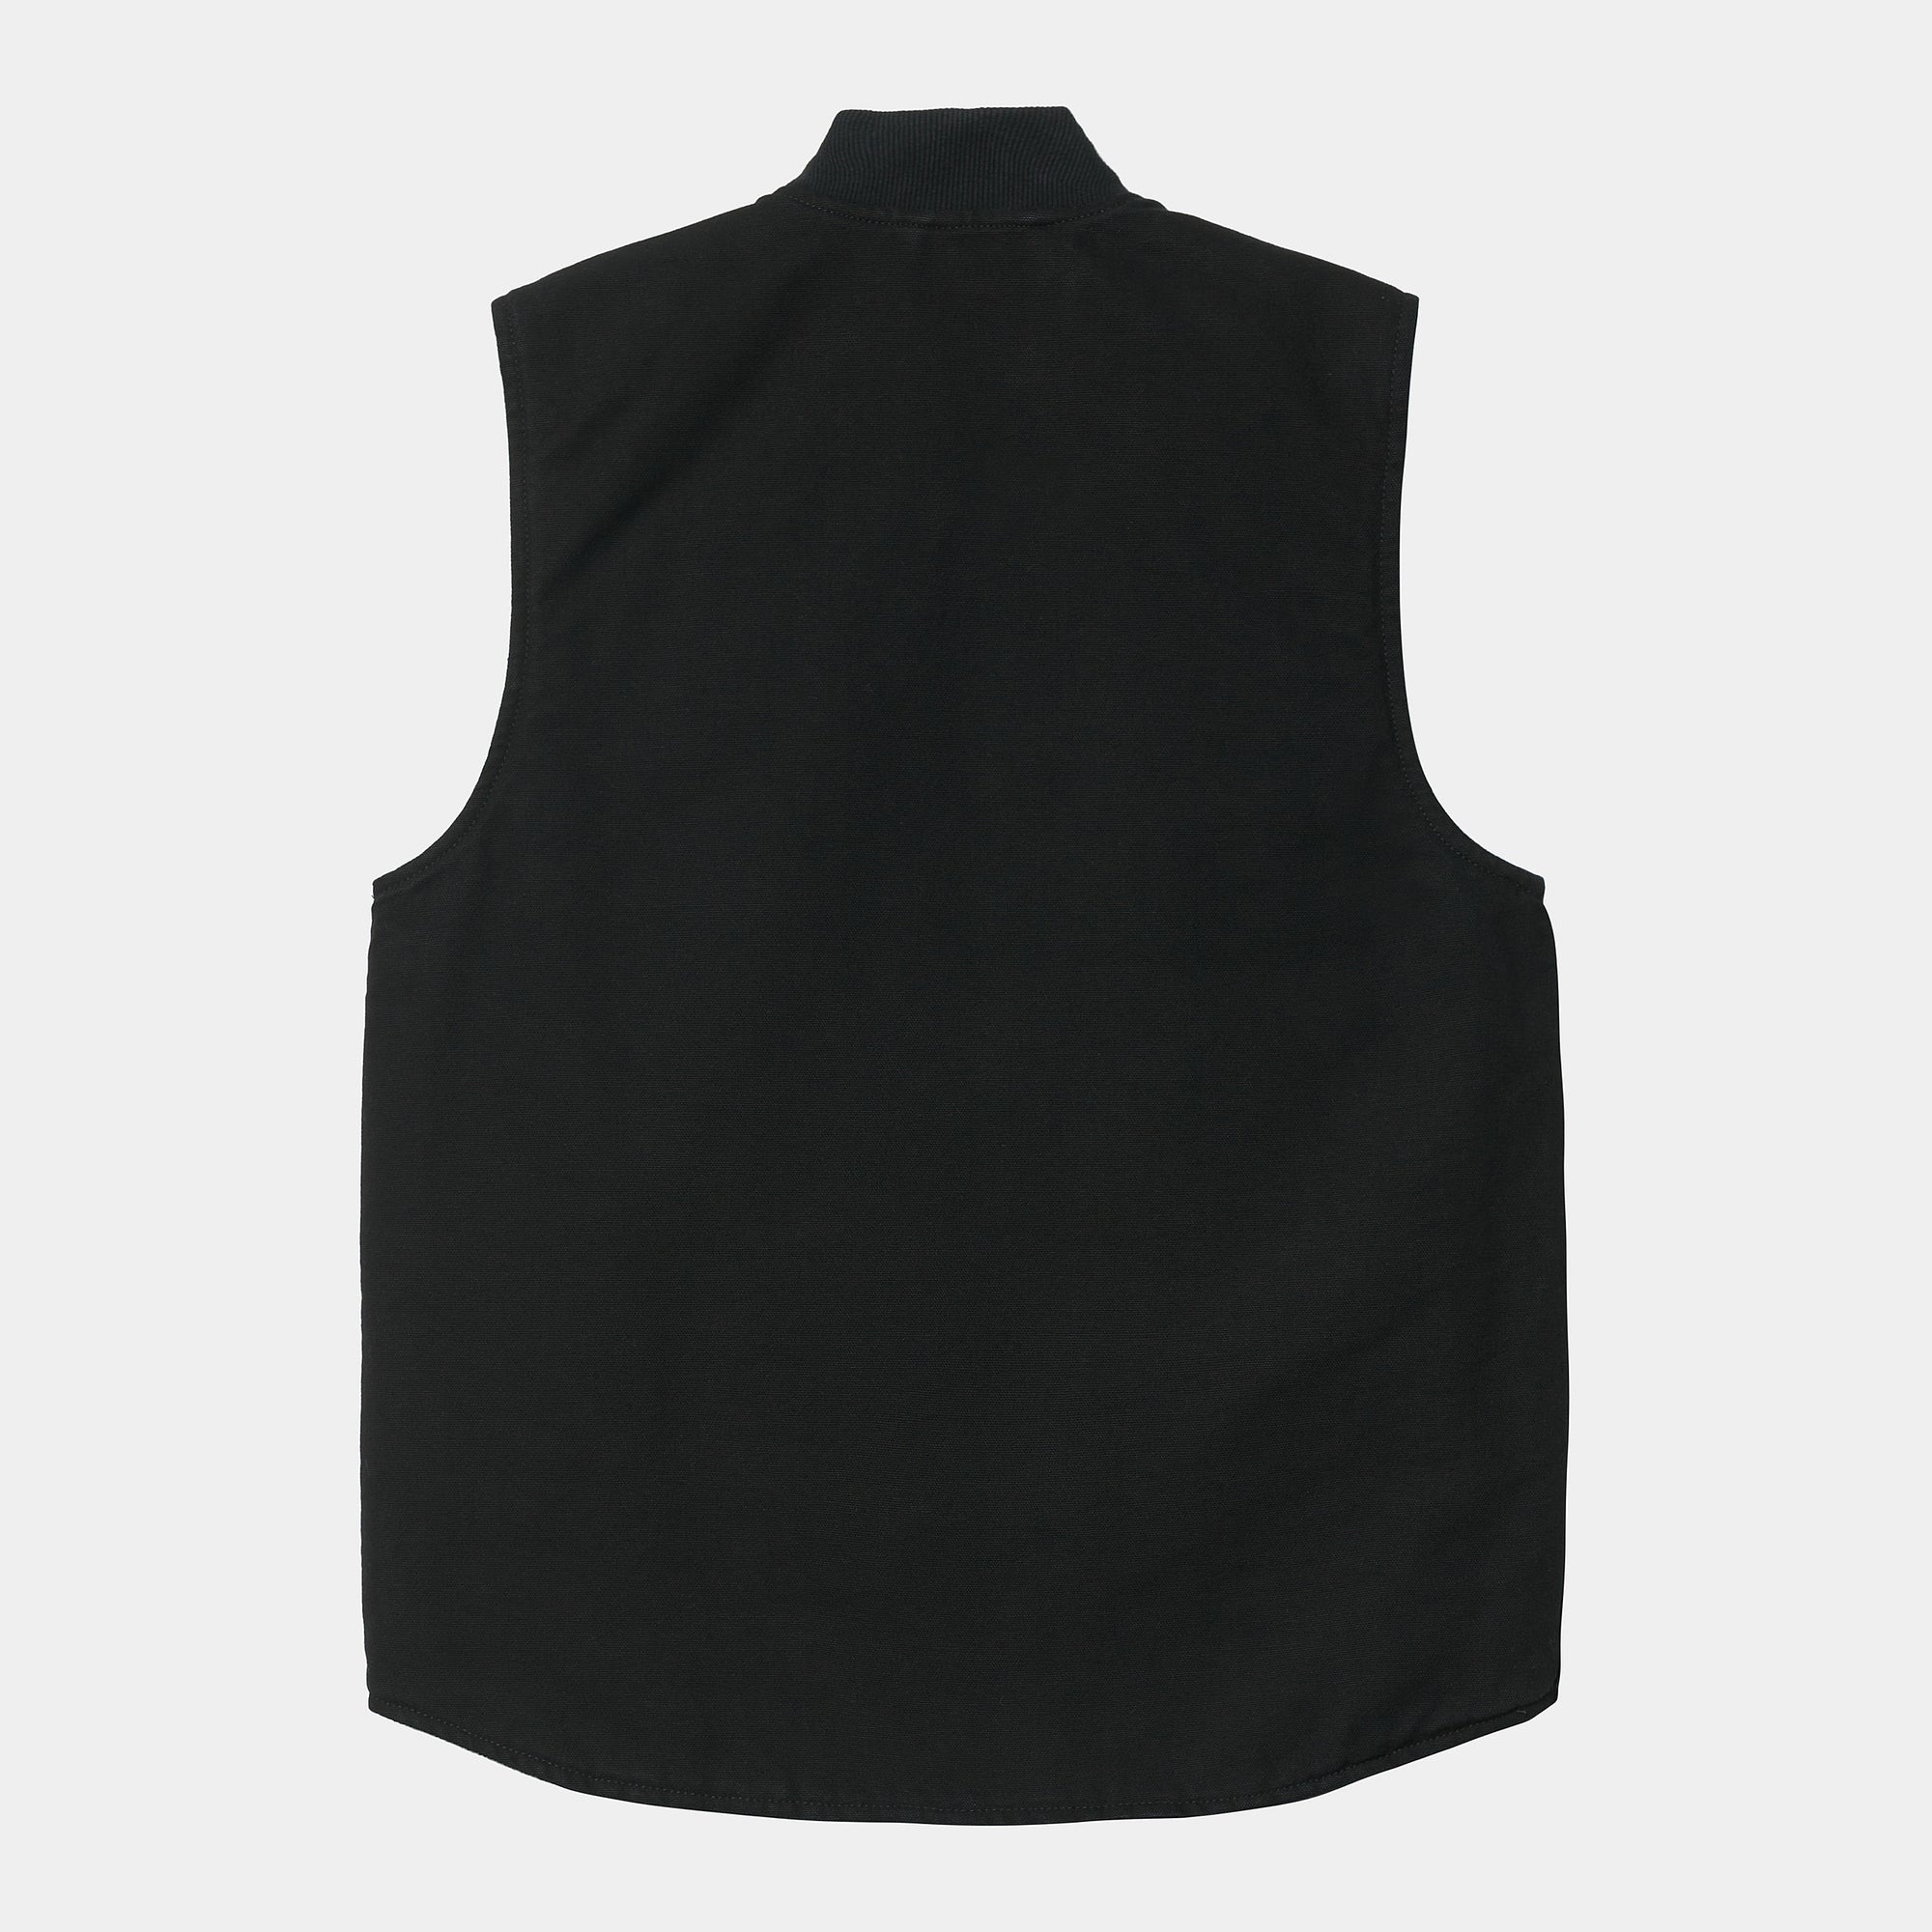 Carhartt WIP Black Canvas Vest Jacket 